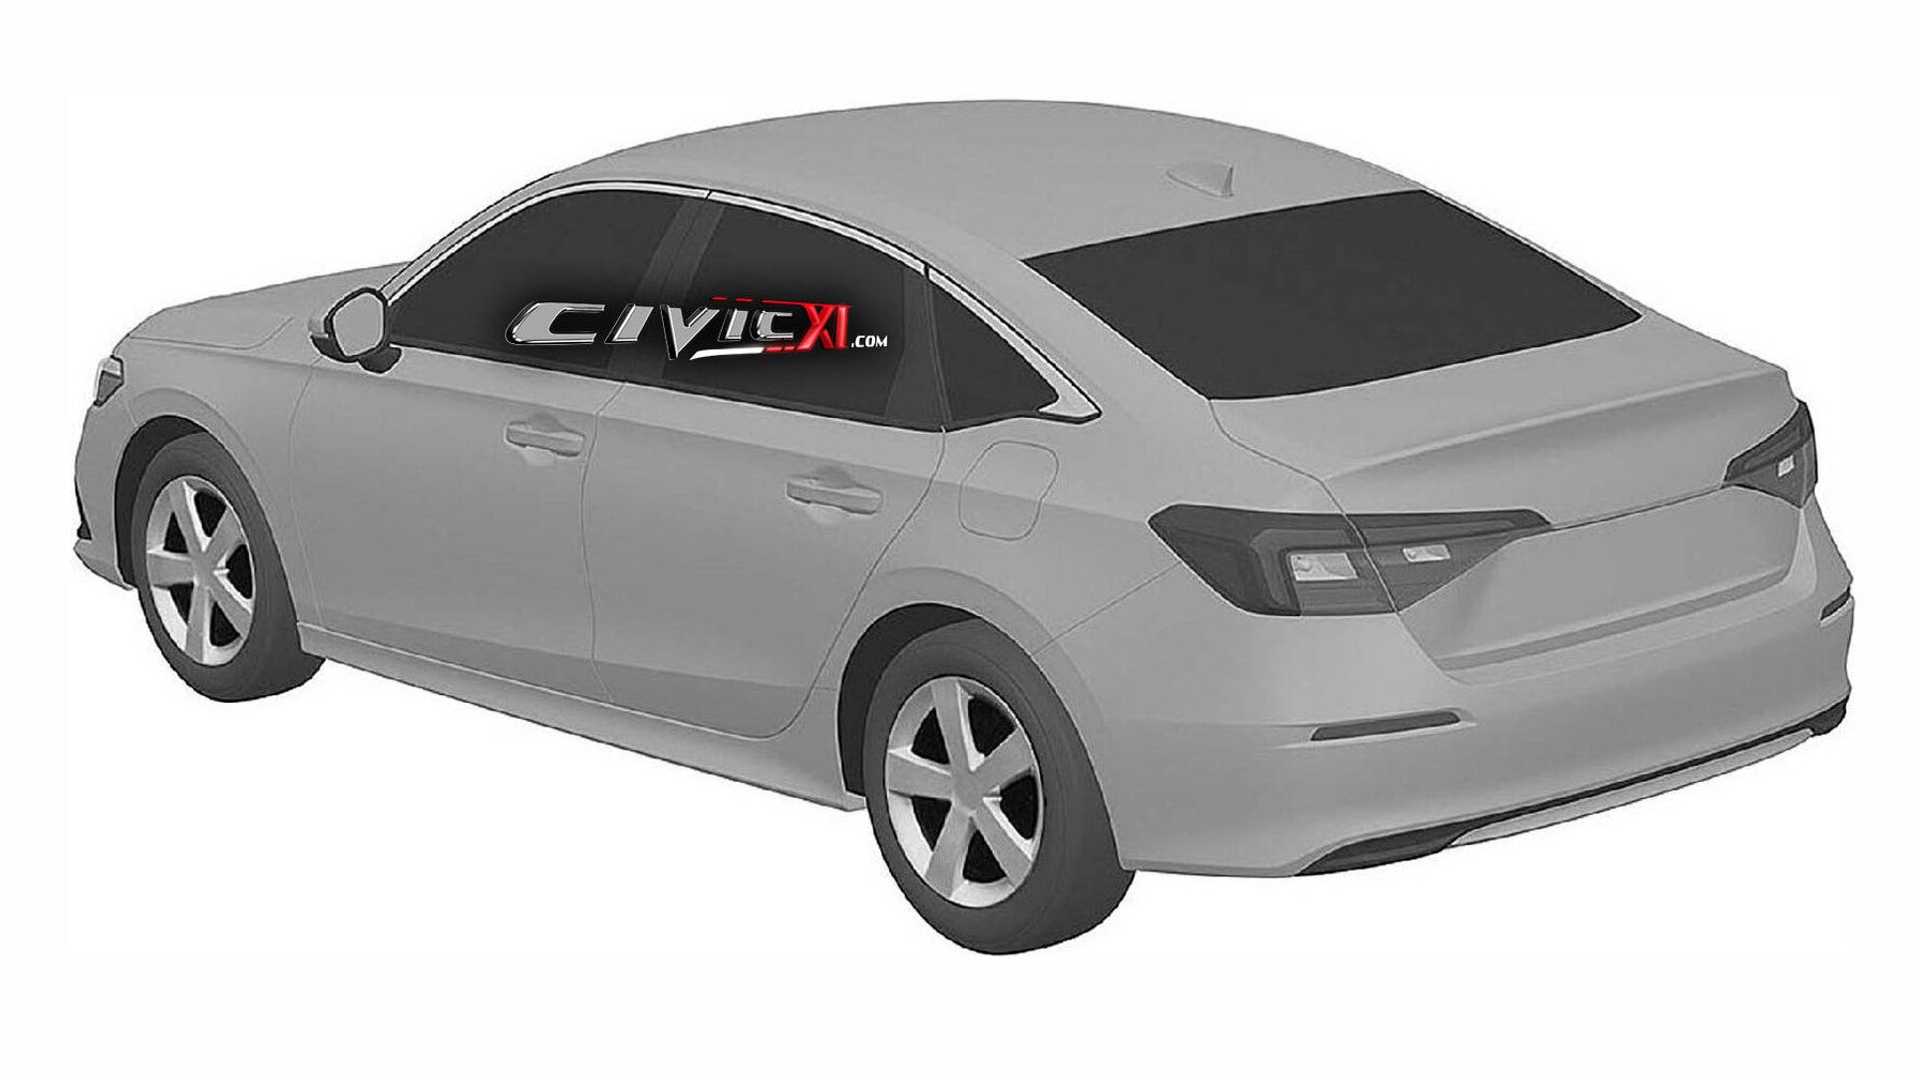 2022-honda-civic-sedan-rear-view-at-patent-office.jpg